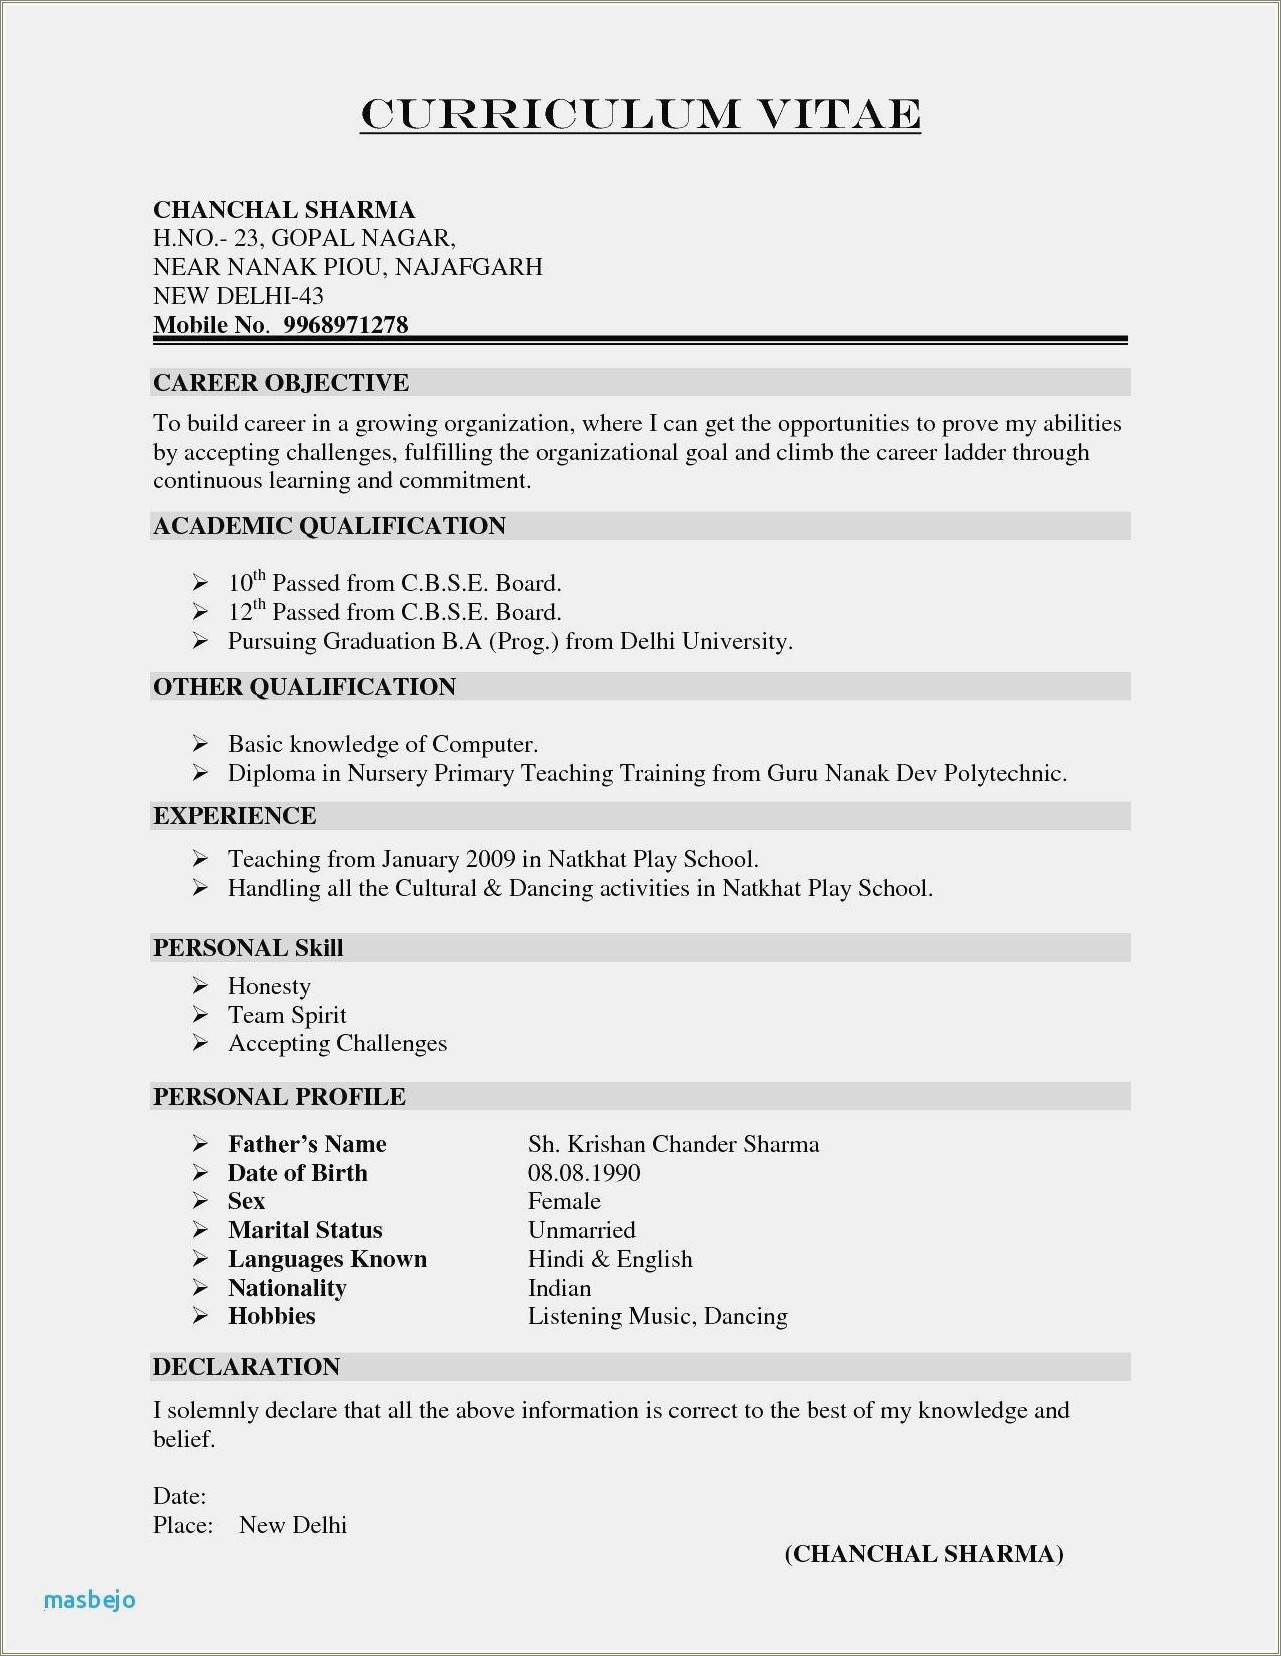 bca resume format in word download